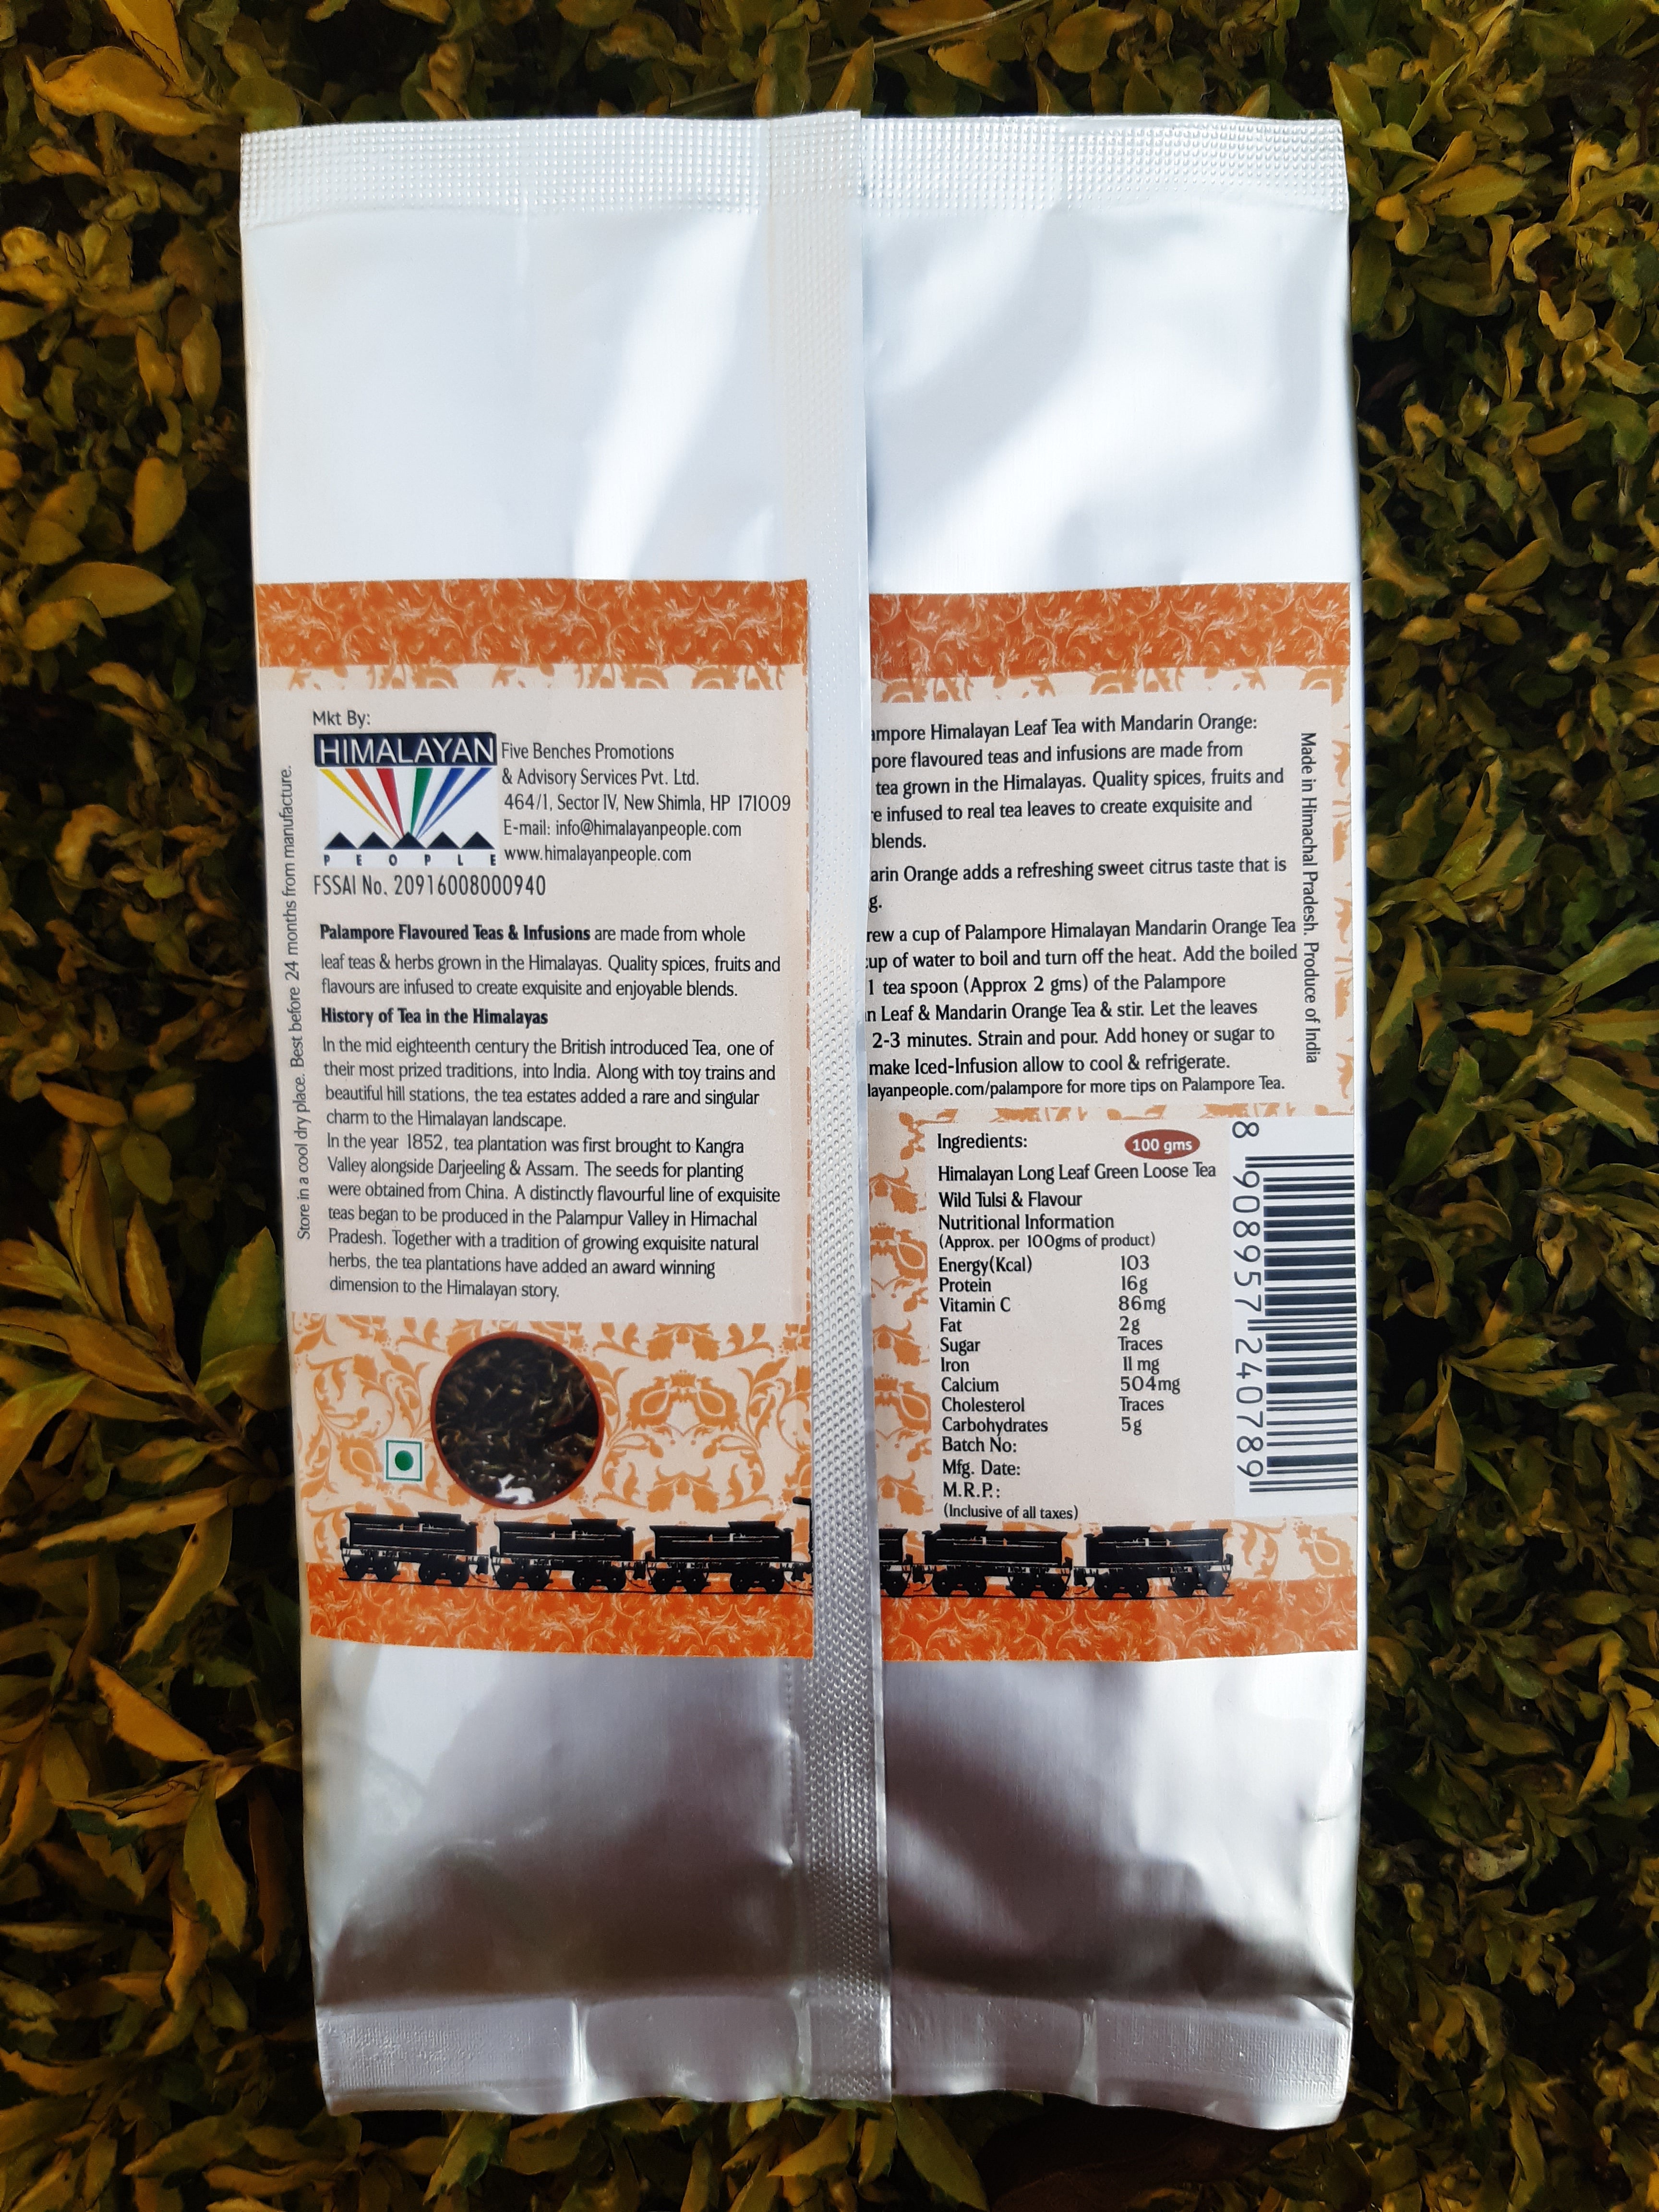 Palampore Pouches: Mandarin Orange & Kesari Mango Green teas- Foil Pouches